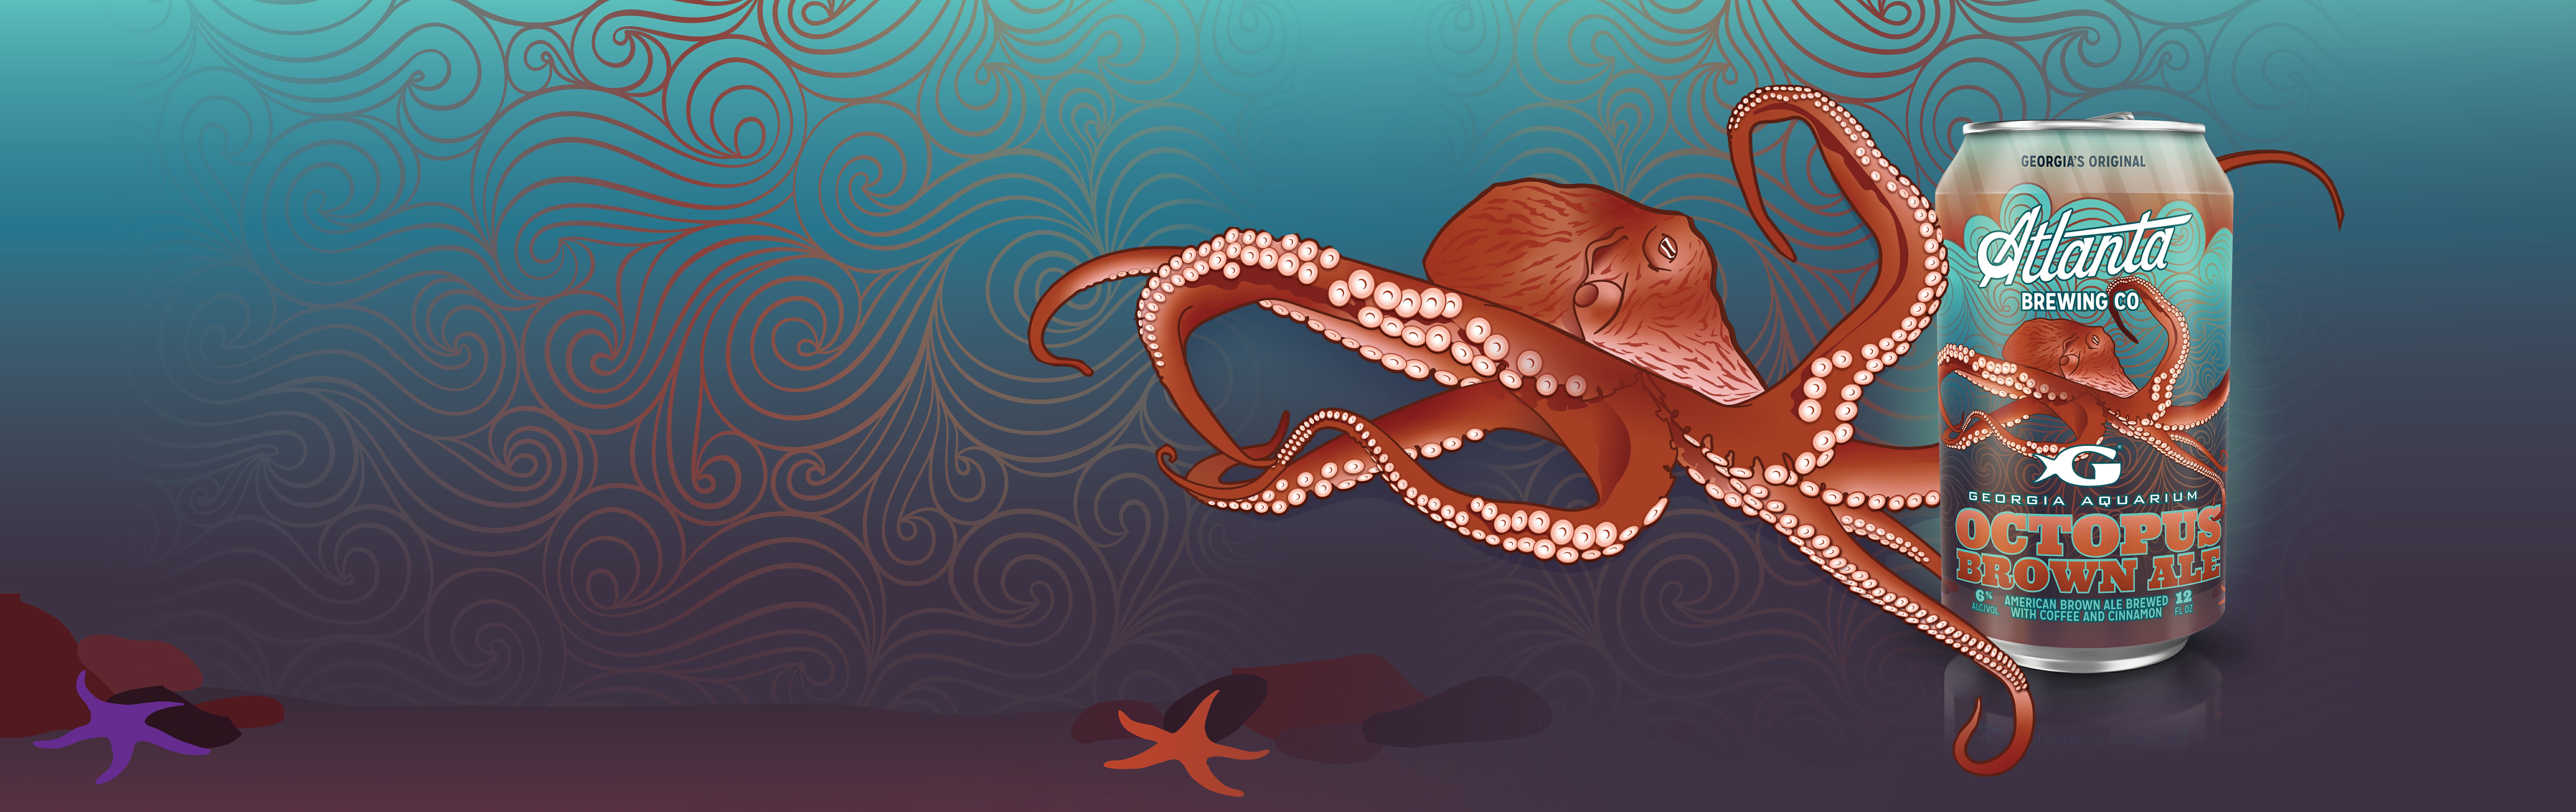 Octopus Brown Ale 3